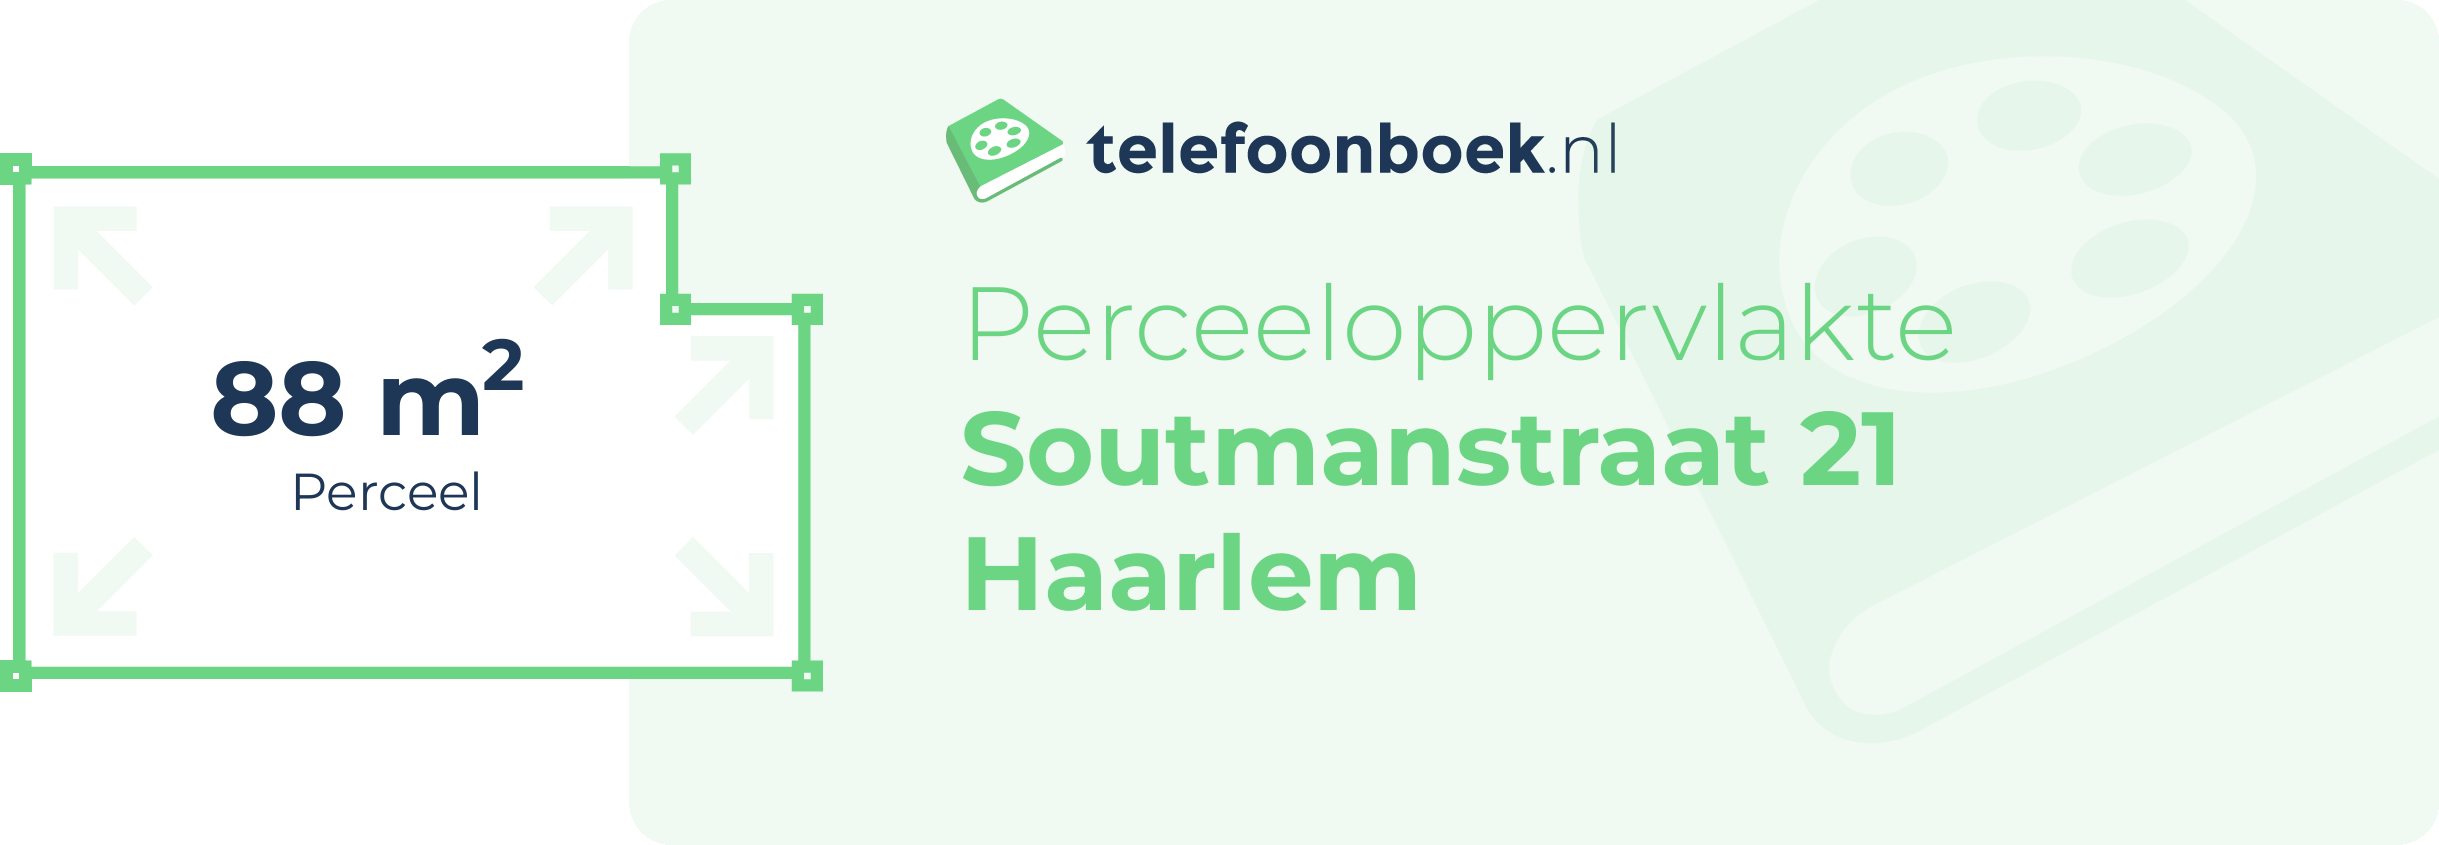 Perceeloppervlakte Soutmanstraat 21 Haarlem